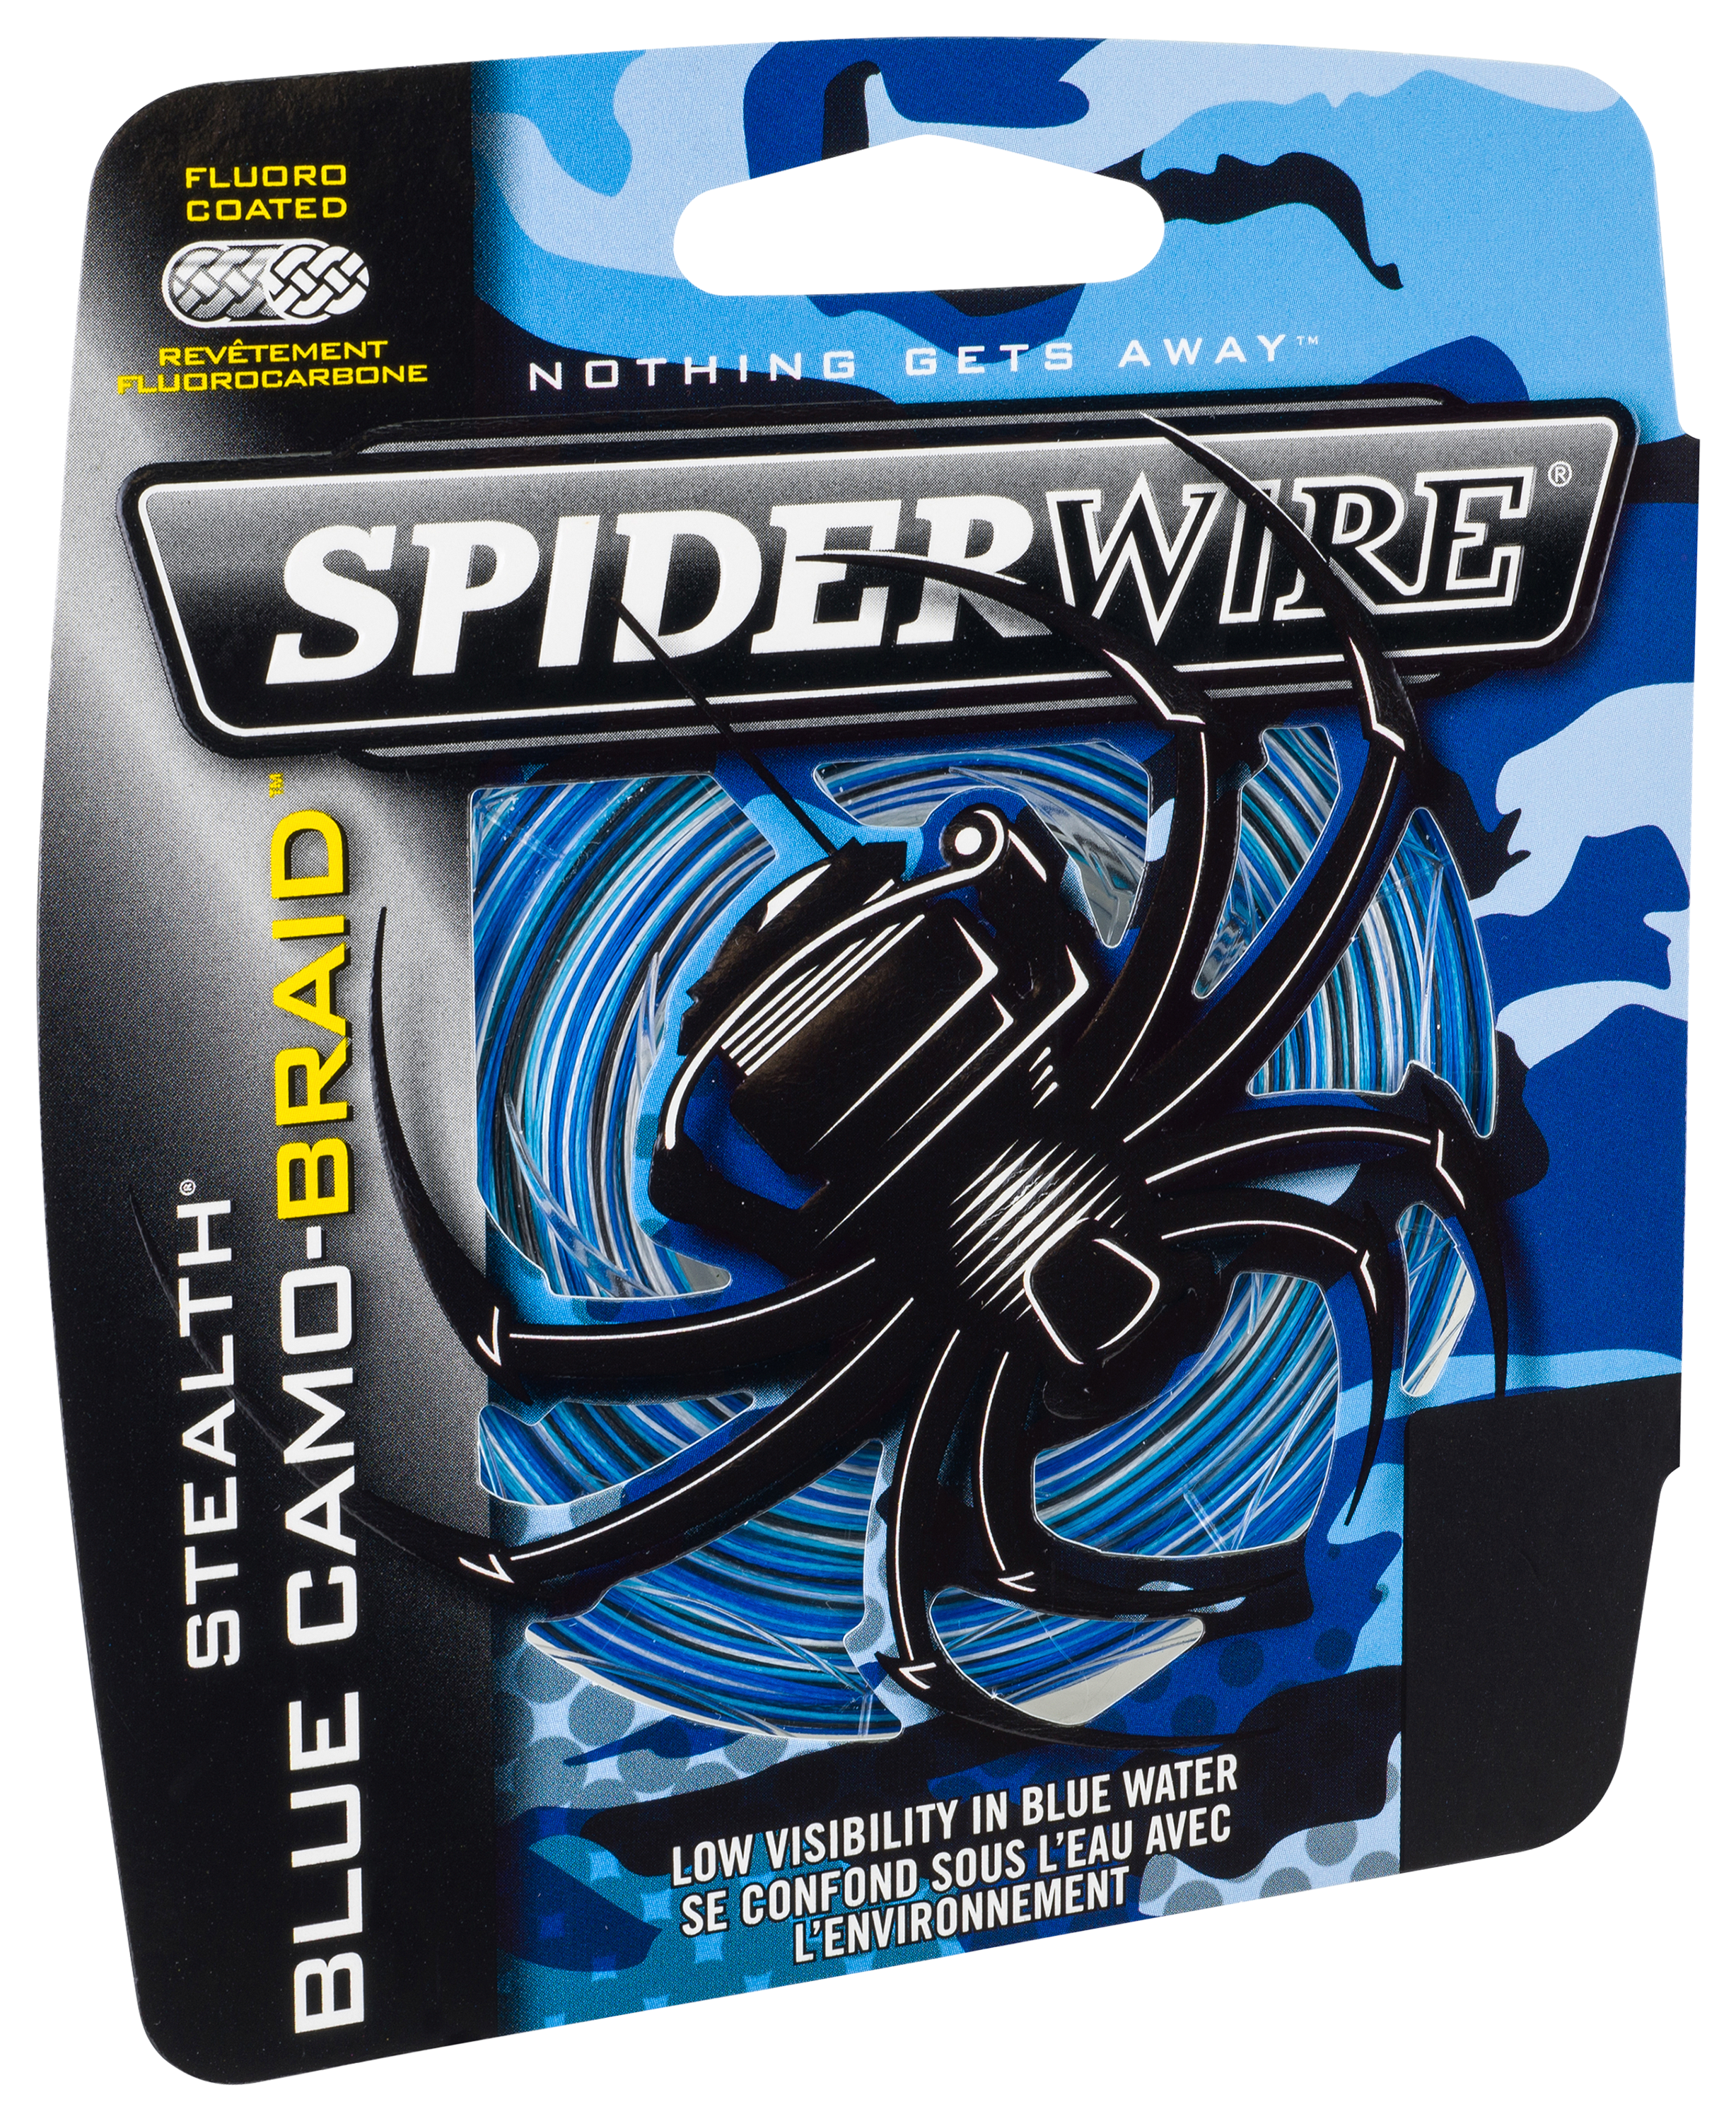 Spiderwire Stealth Camo Braid Fishing Line (300 yds) - 10 lb Test 